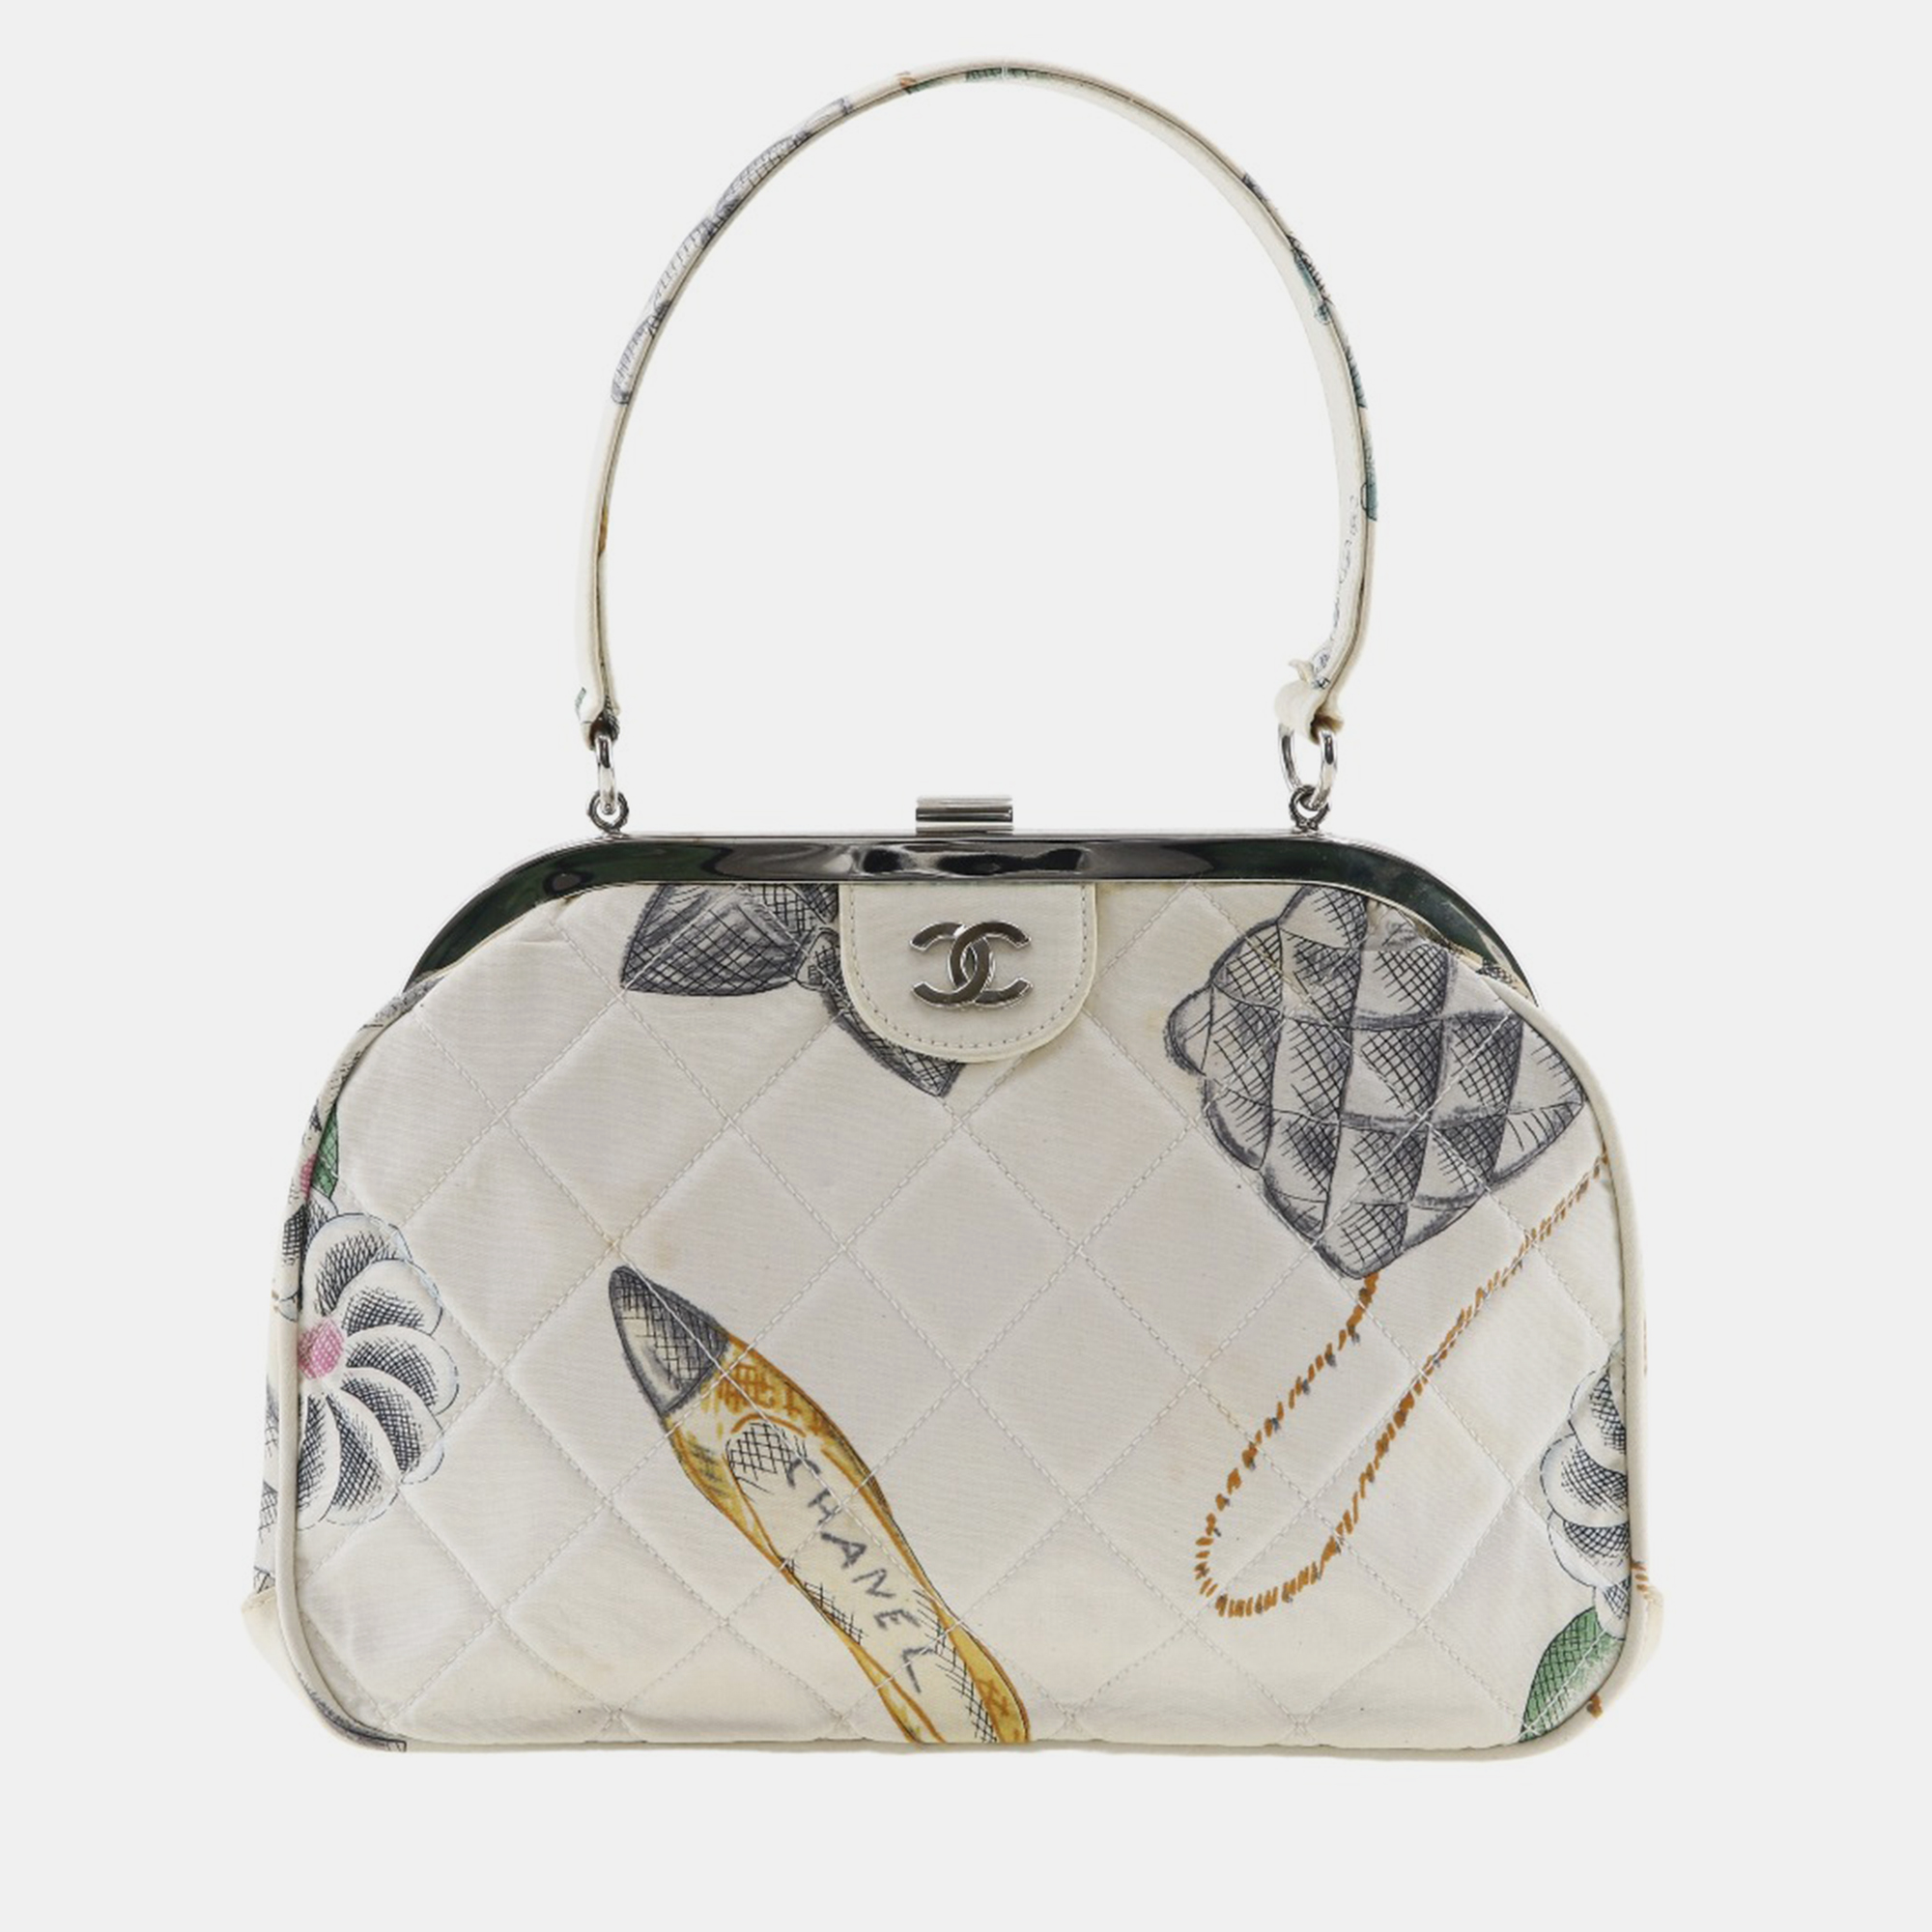 Chanel white quilted canvas maguchi handbag